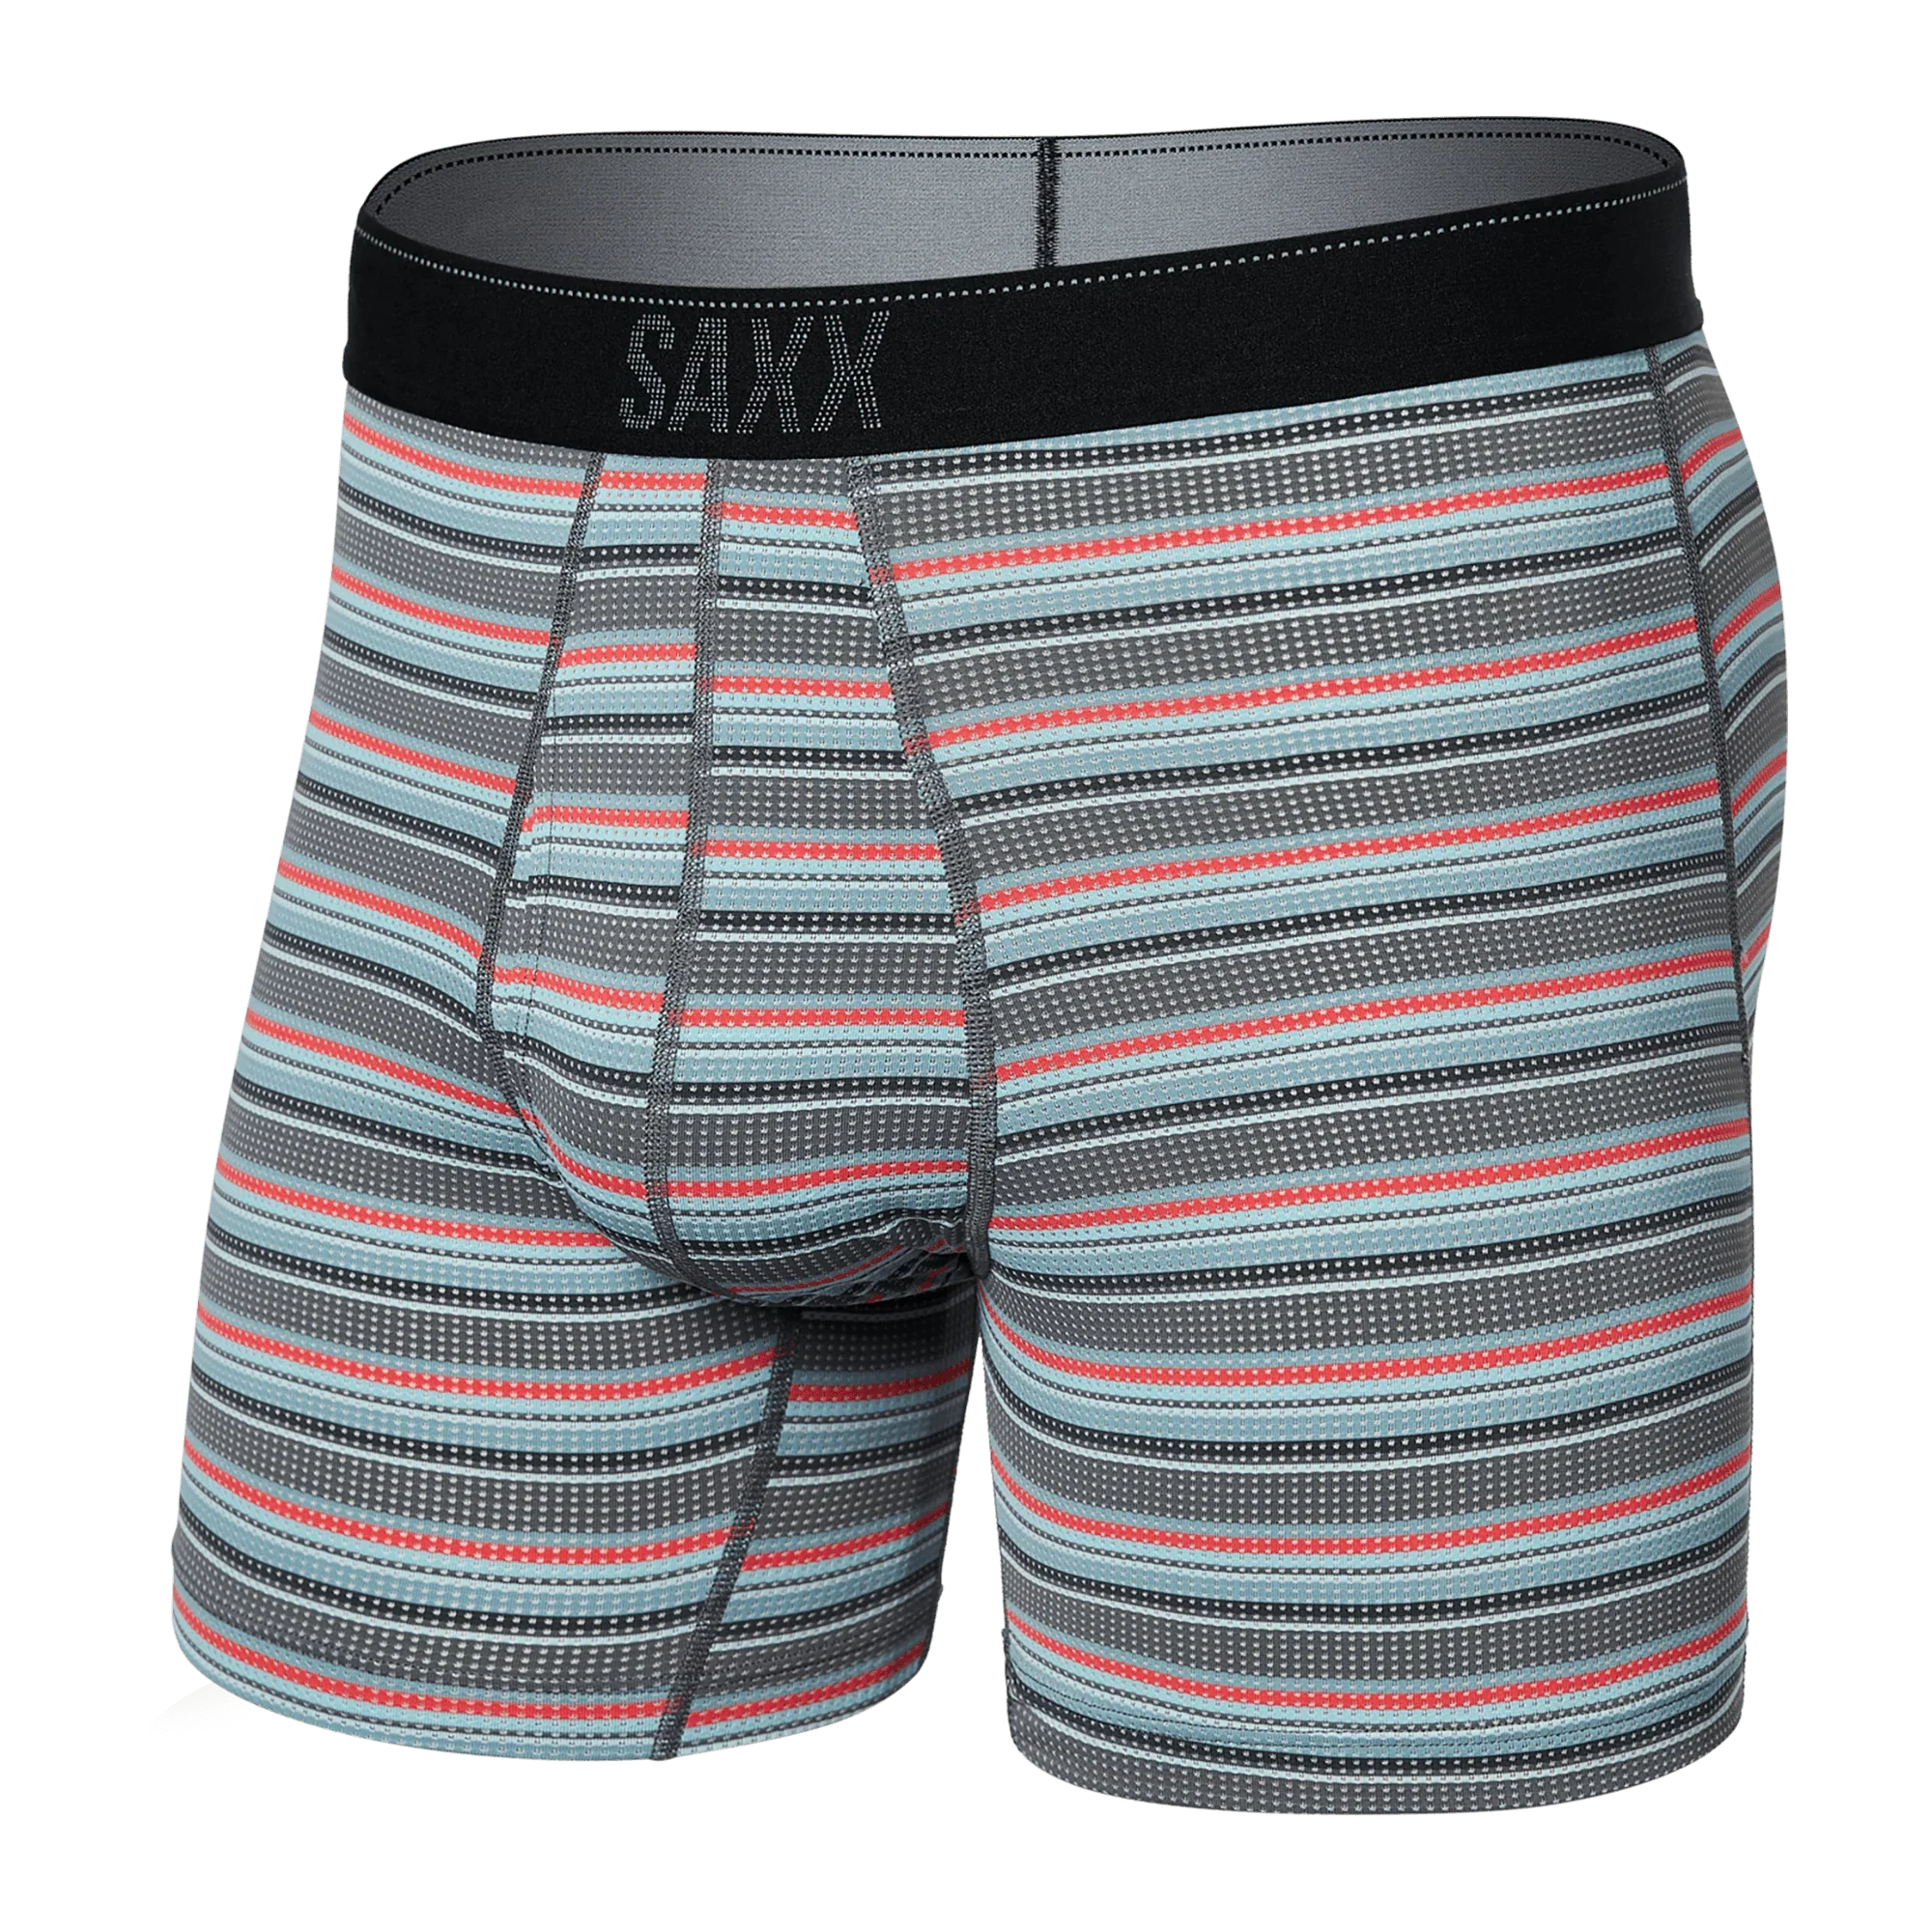 'SAXX Quest Quick Dry Mesh Boxer Brief - Field Stripe' in 'Charcoal' colour